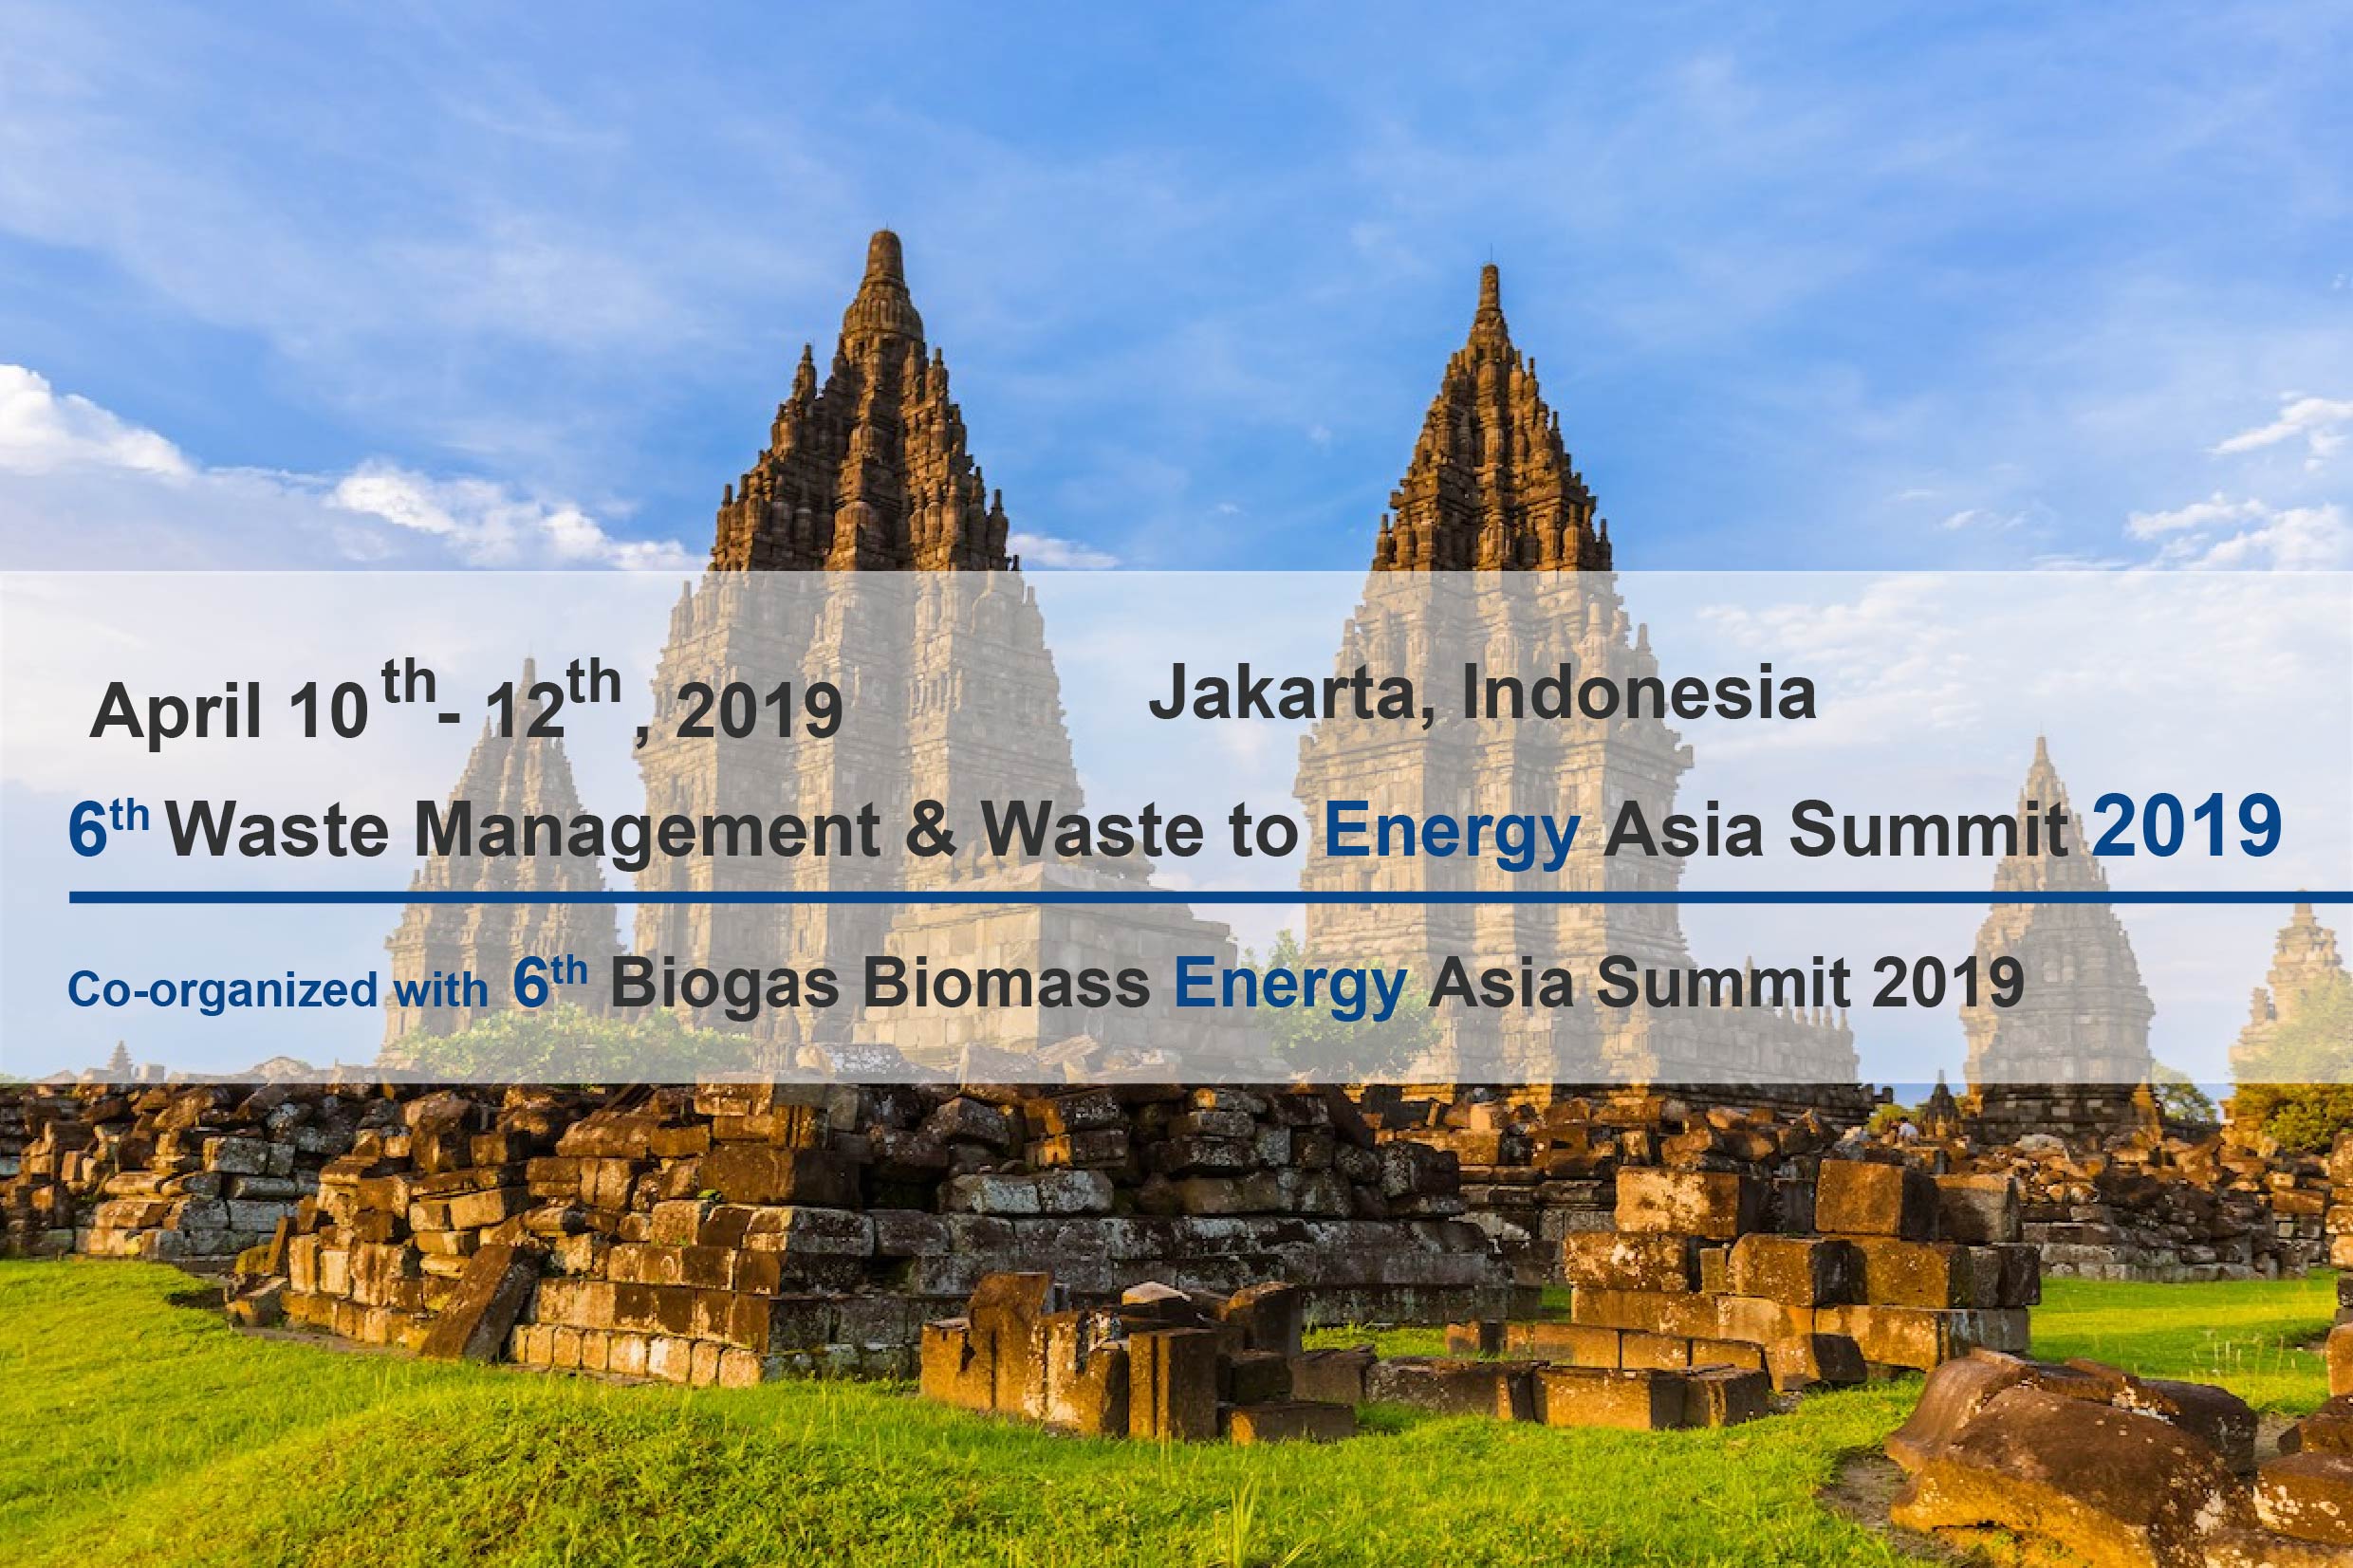 Waste to Energy Asia Summit 2019 Indonesia Focus